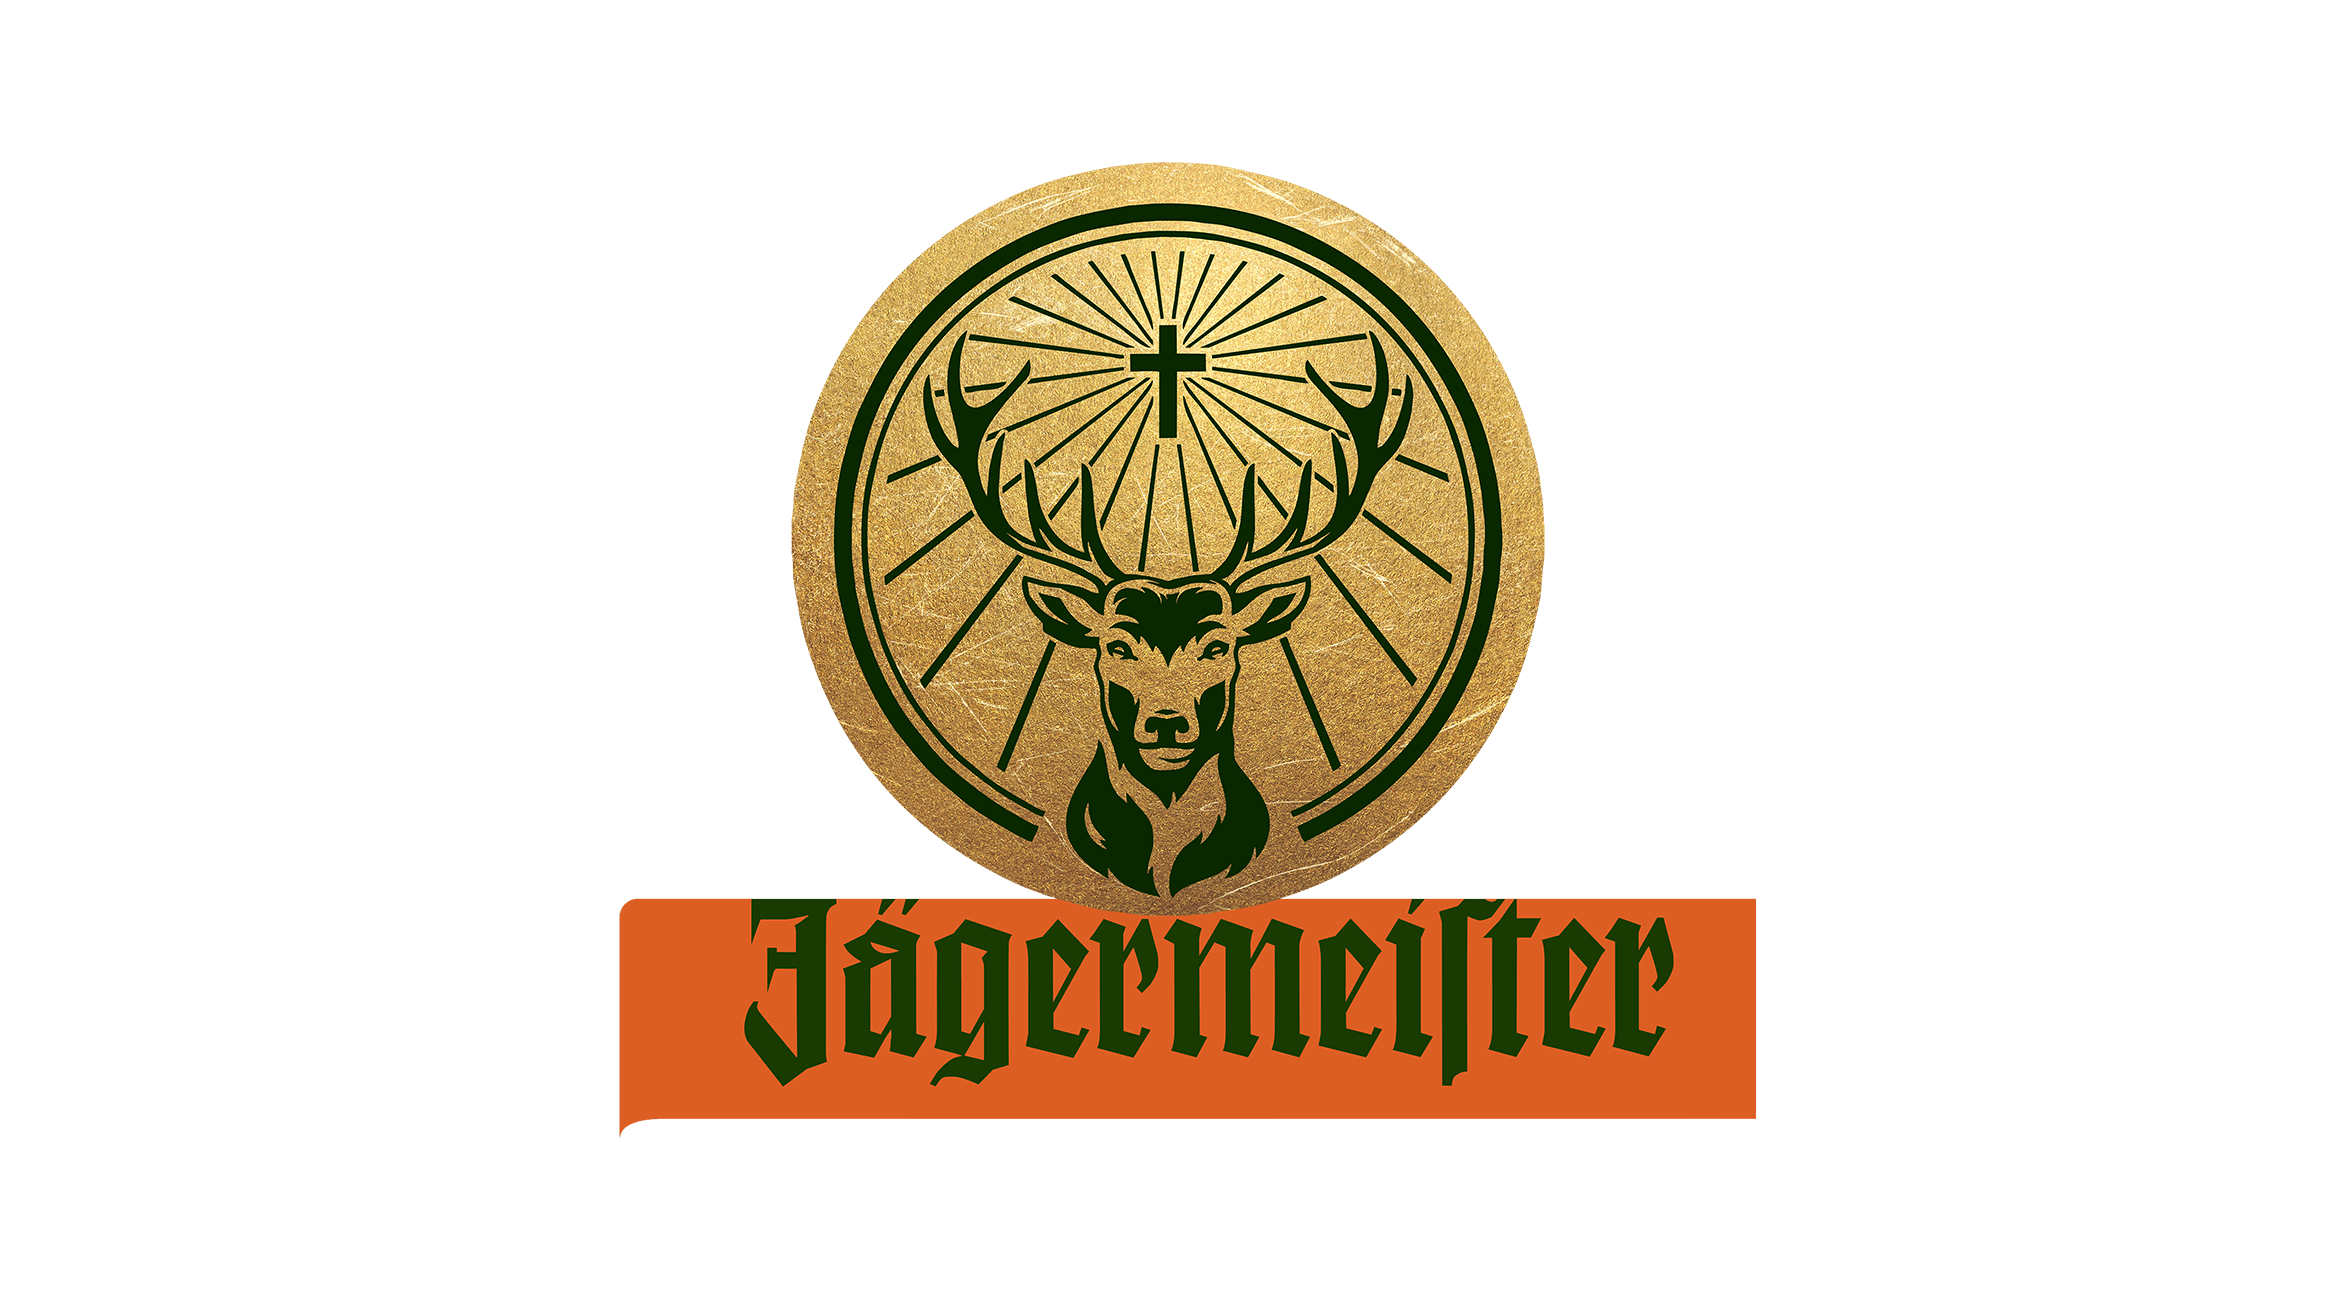 partners-logo-jagermeister